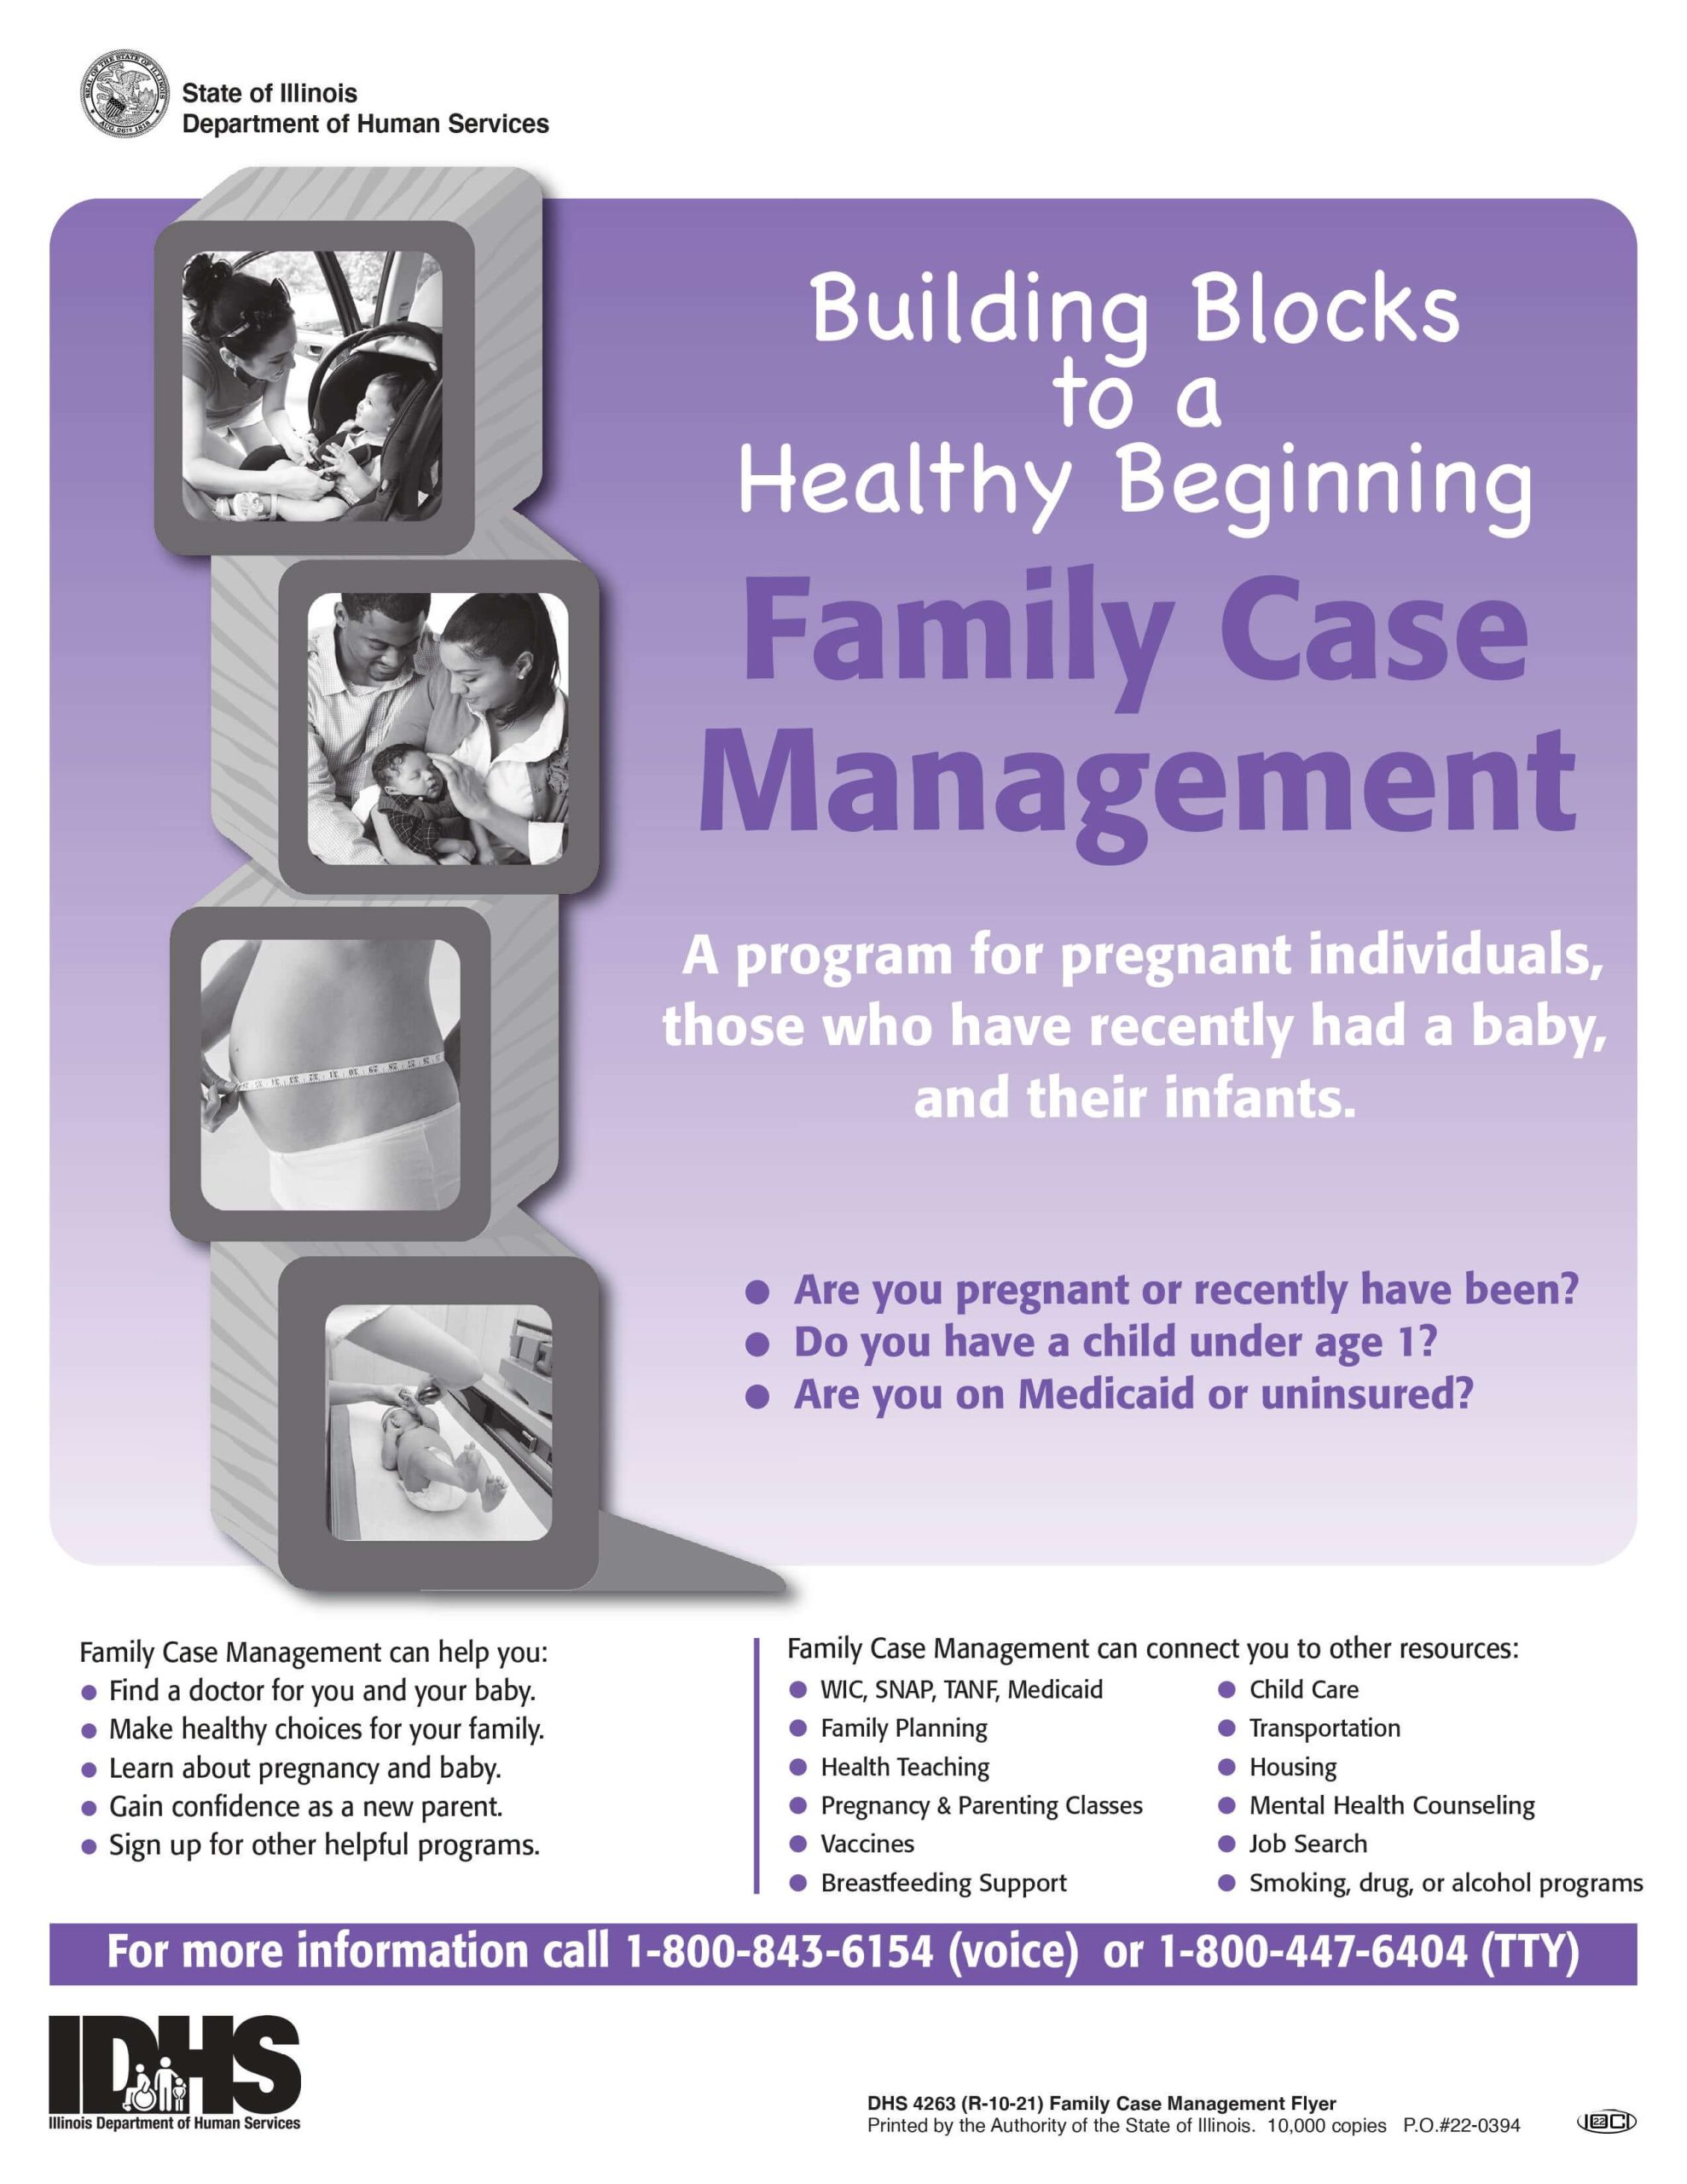 Family Case Managment